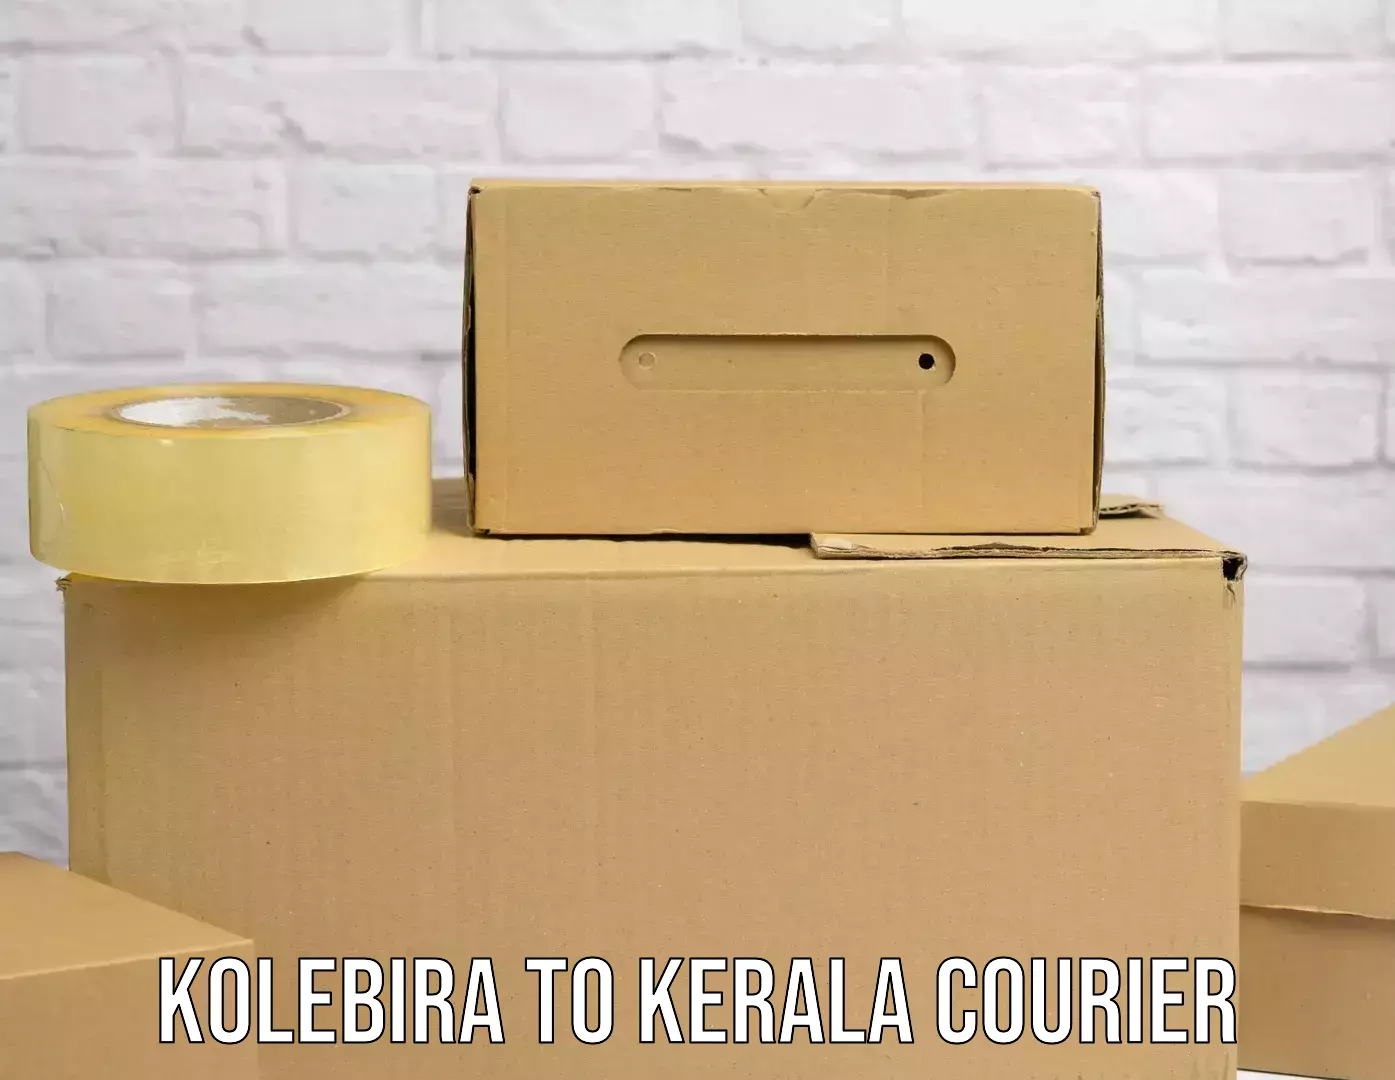 Local delivery service Kolebira to Kerala